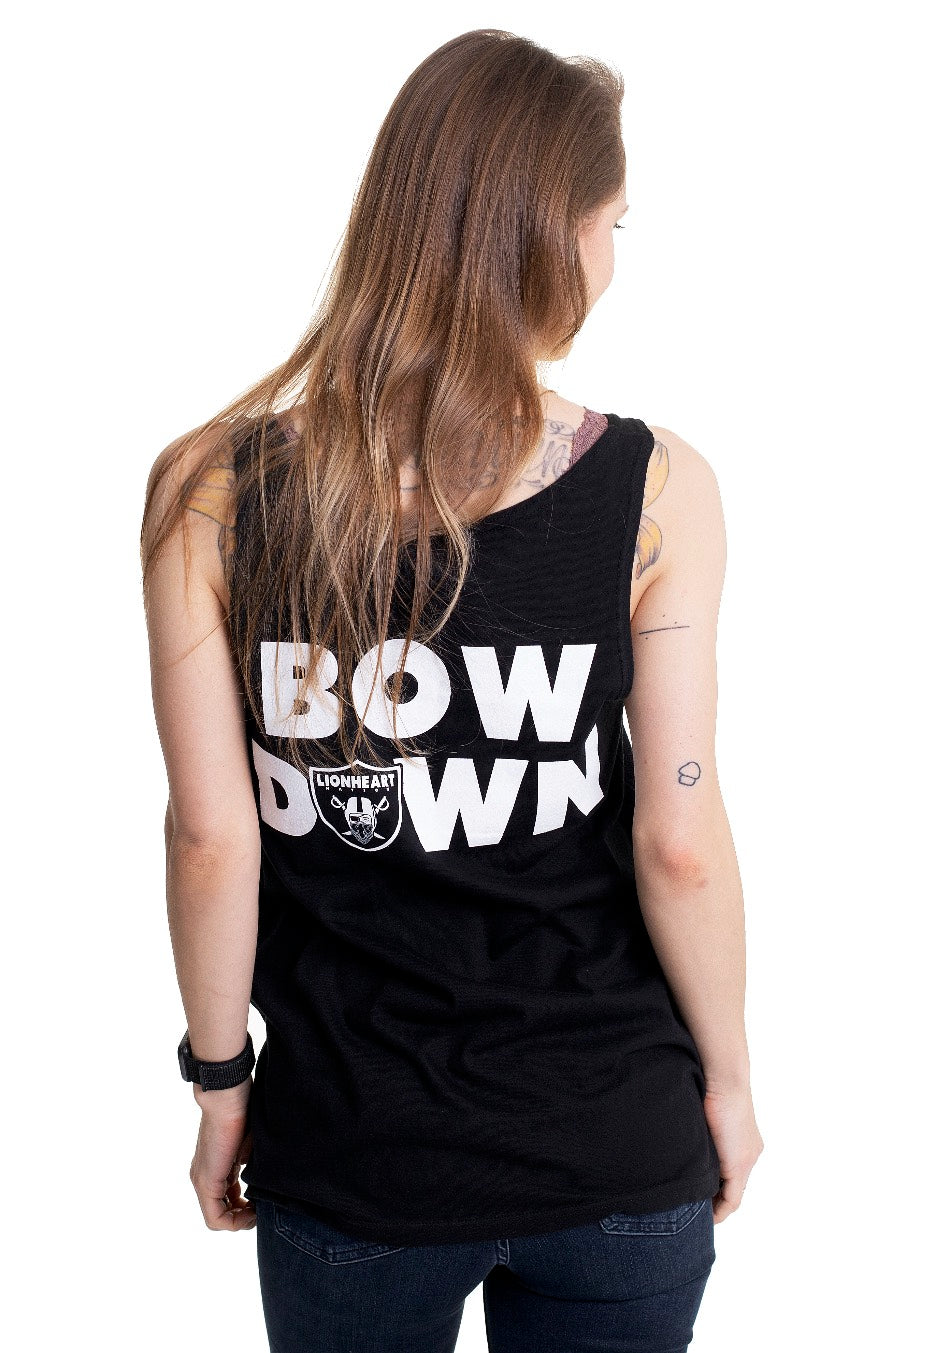 Lionheart - Bow Down - Girl Tank